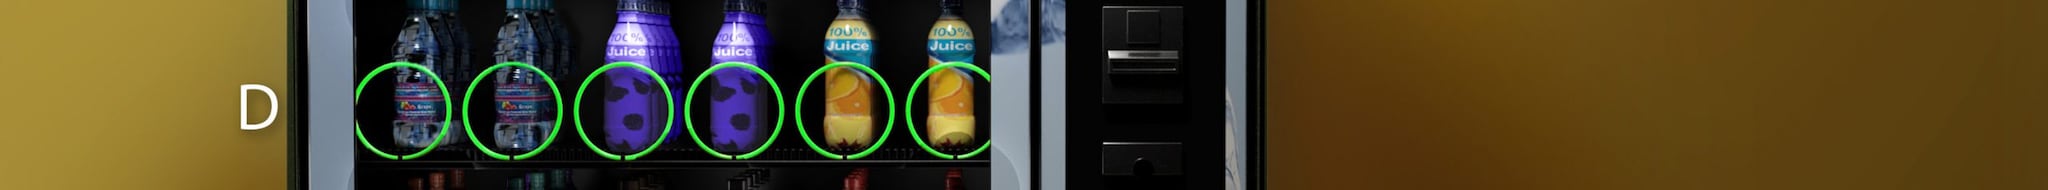 Row D - Beverage vending machine